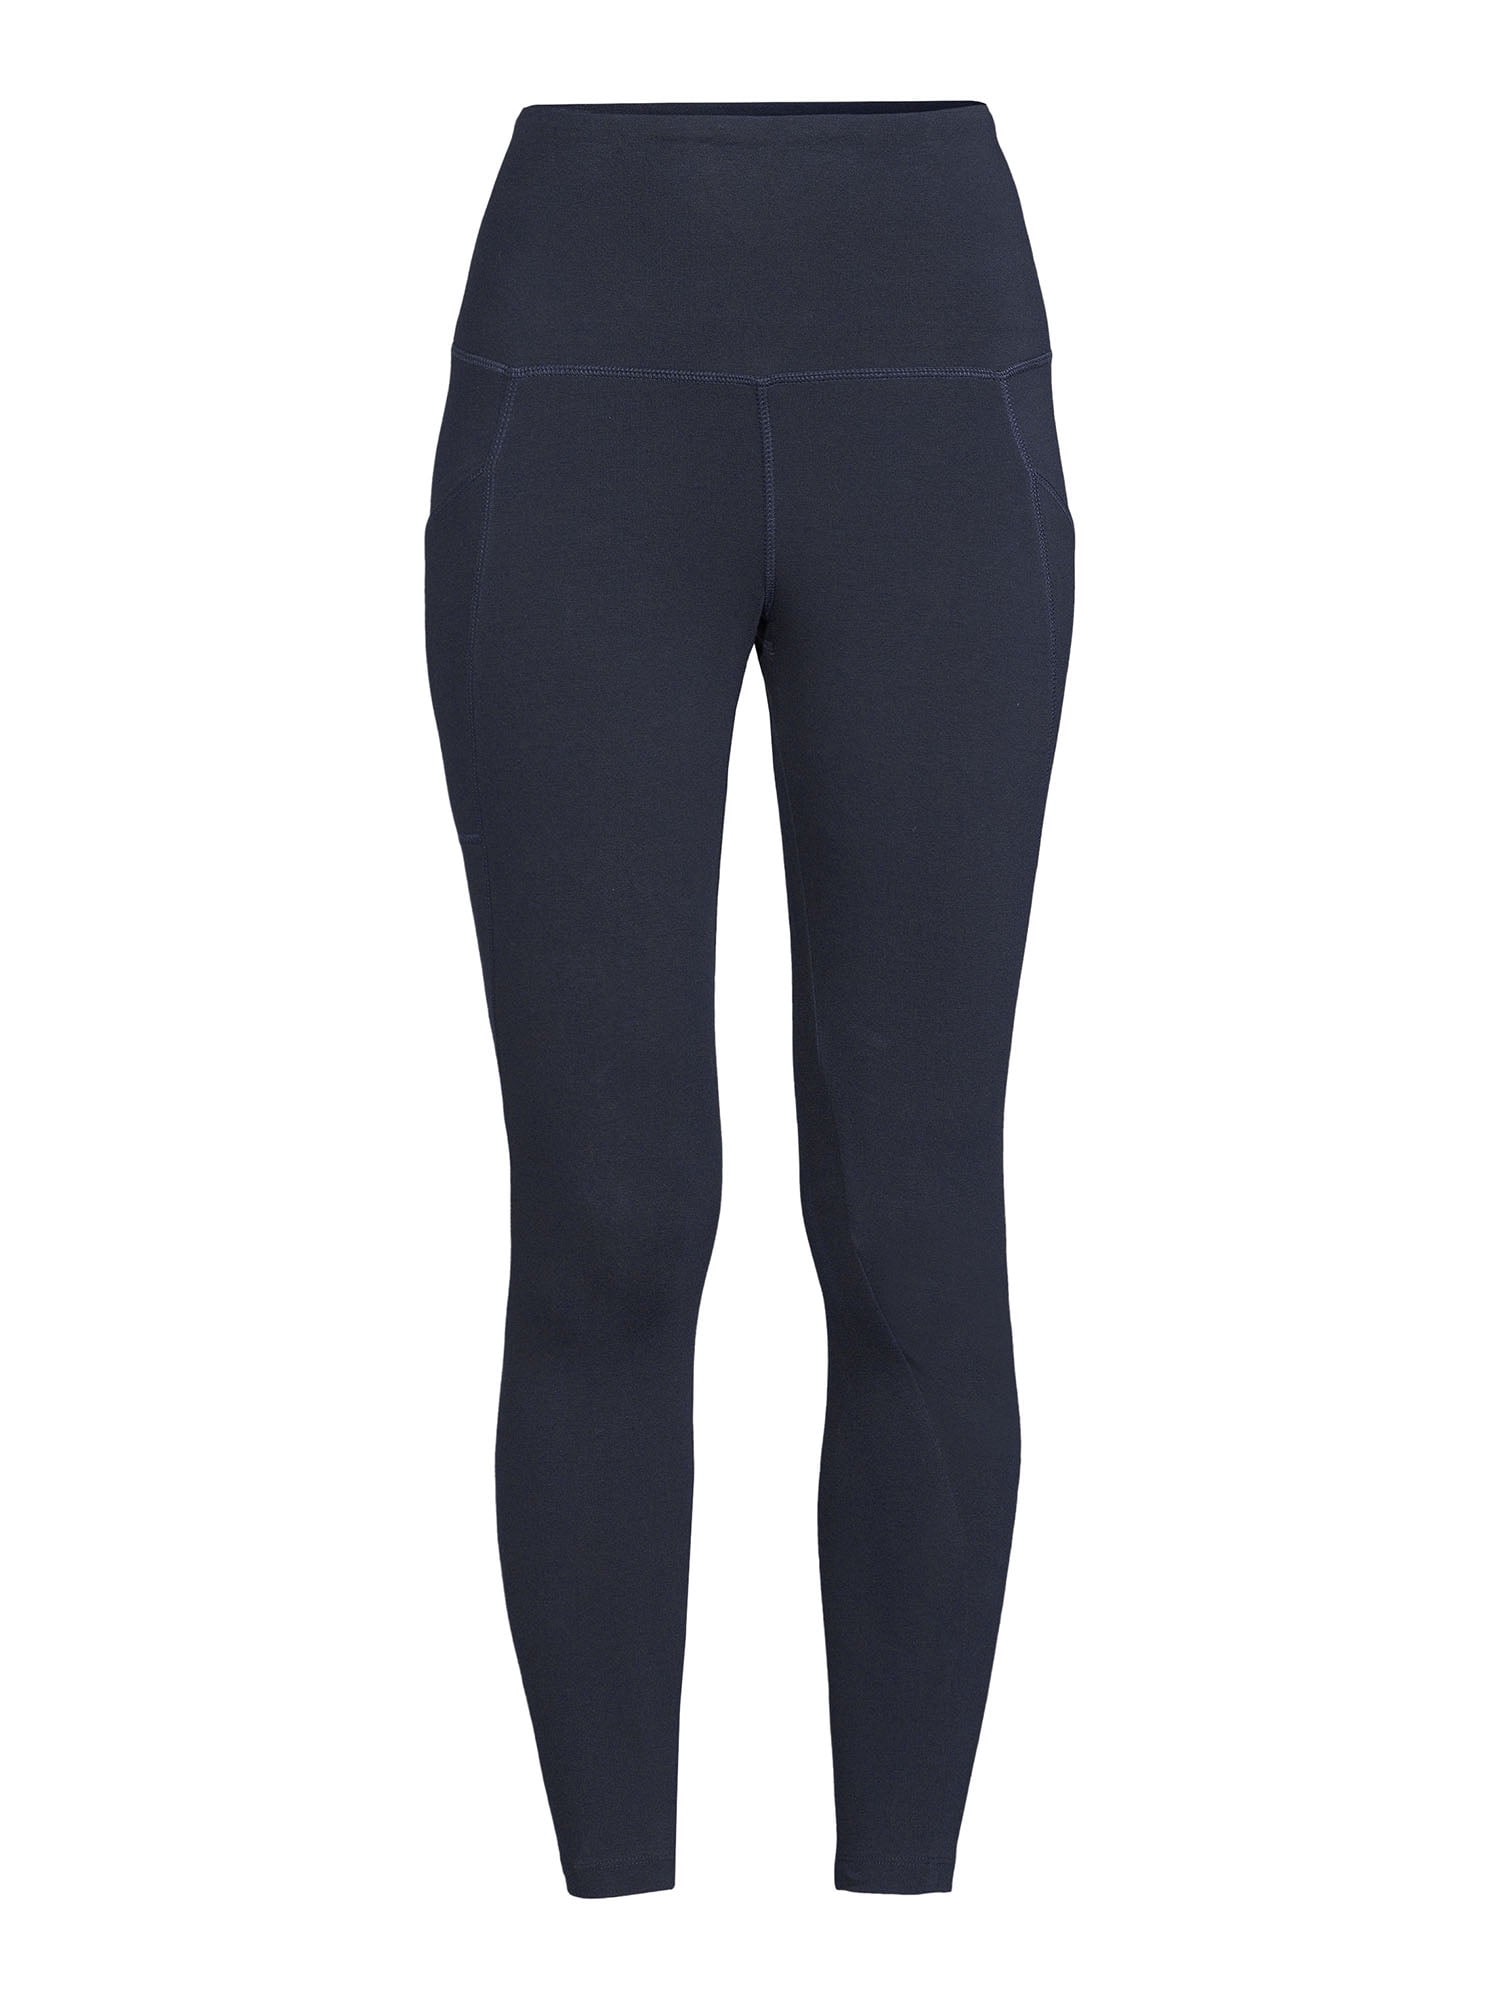 Buy Jockey Aw87 Women's Cotton Elastane Leggings With Ultrasoft Waistband  Navy Blue online